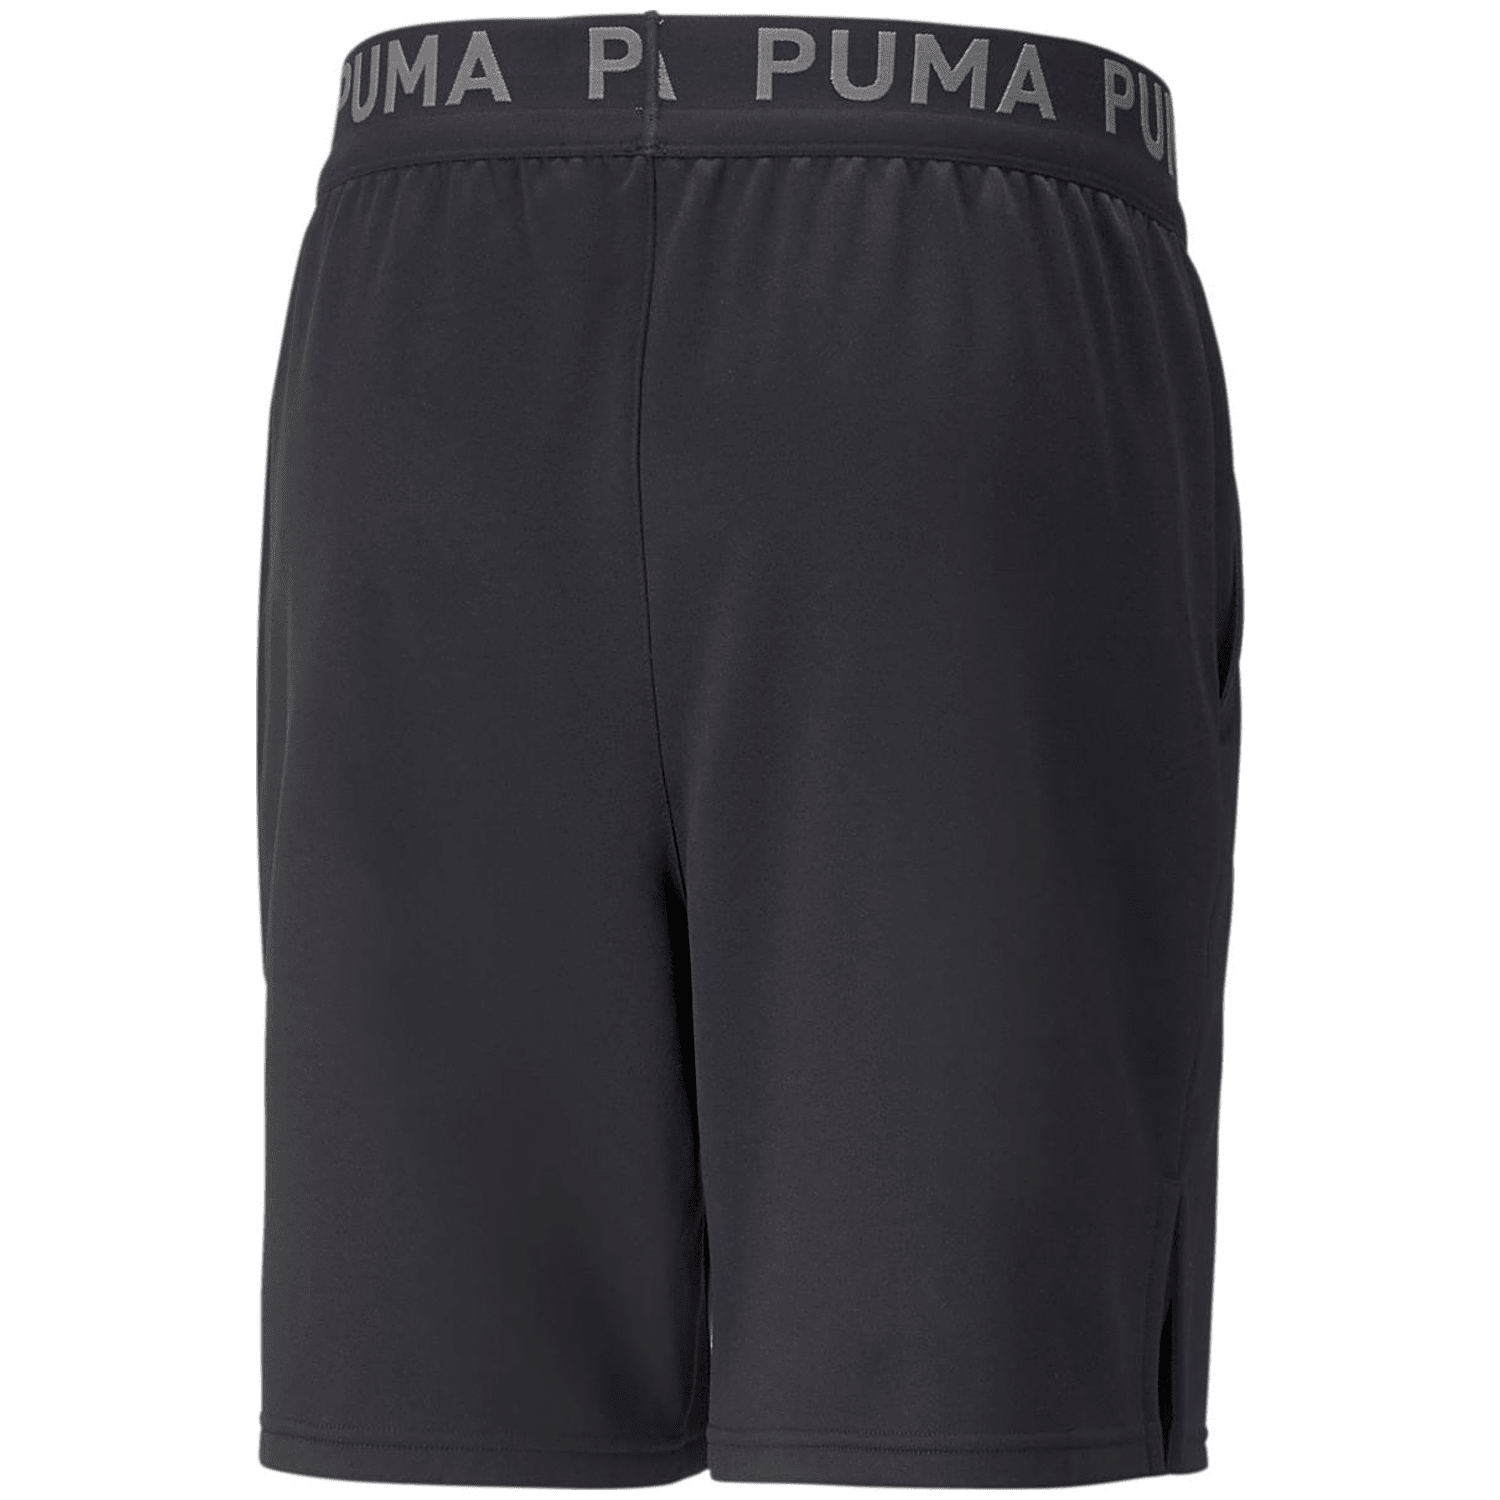 Puma Train FIT Pwrfleece 7" Short Herren Shorts